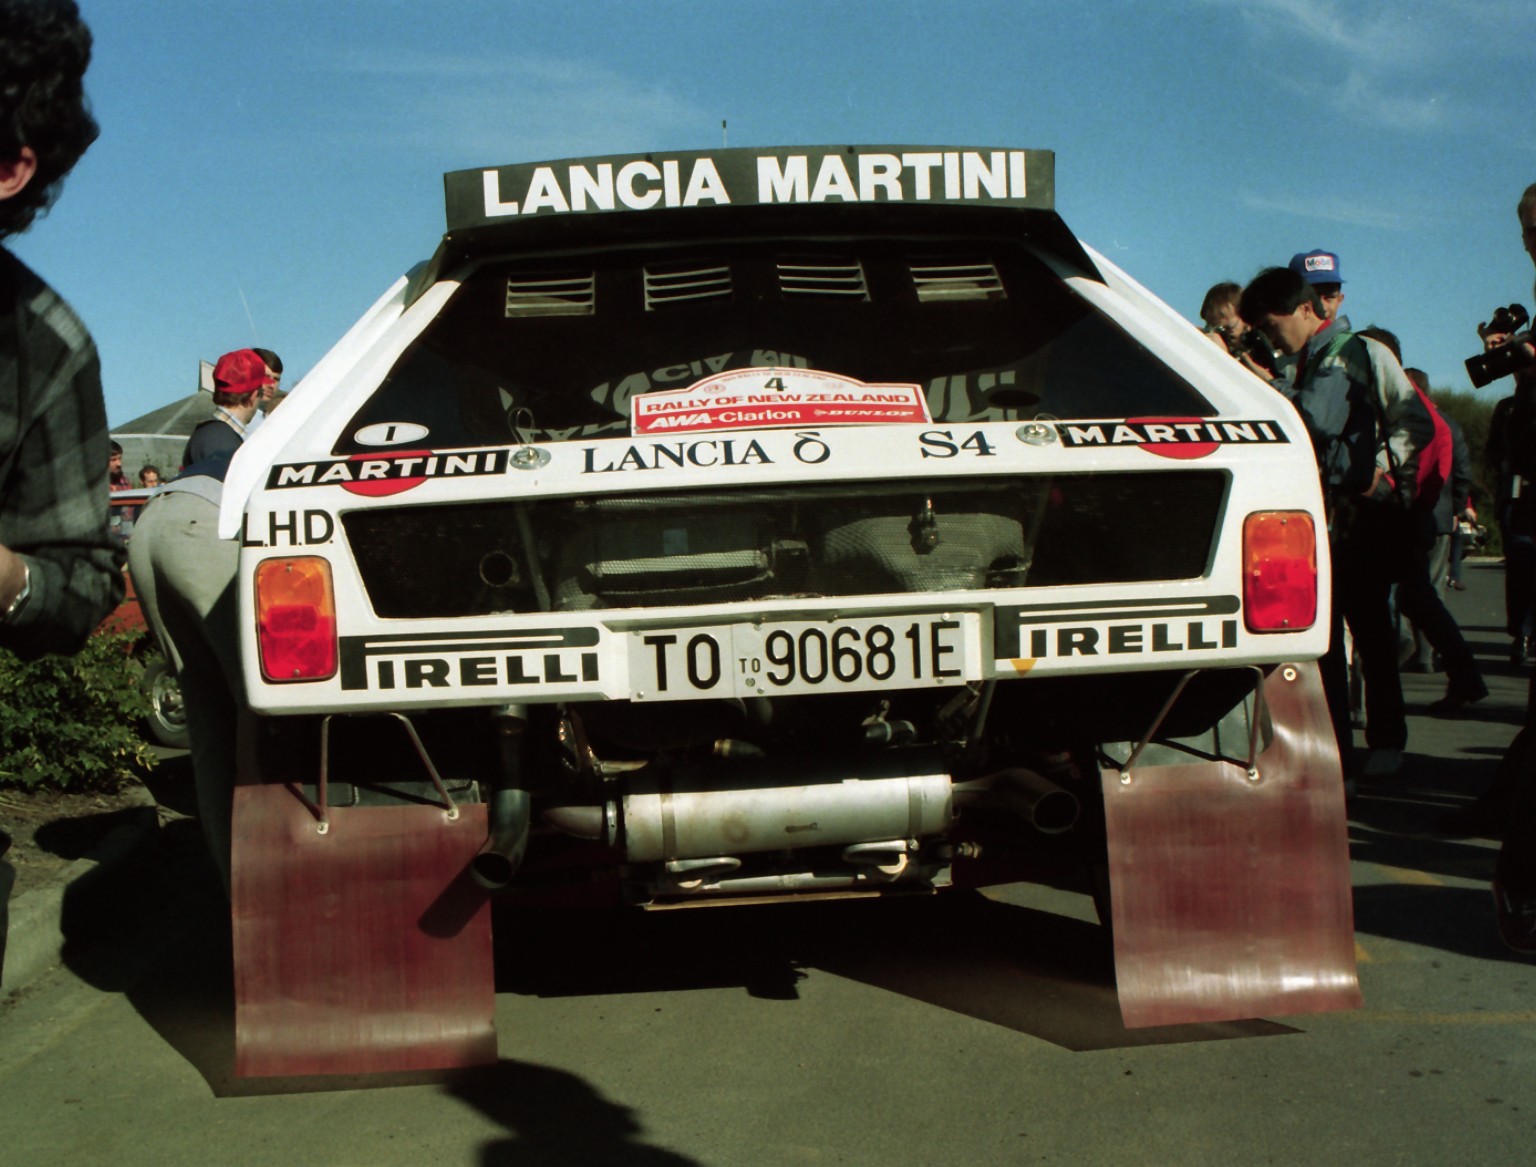 Baixar papel de parede para celular de Lancia, Veículos gratuito.